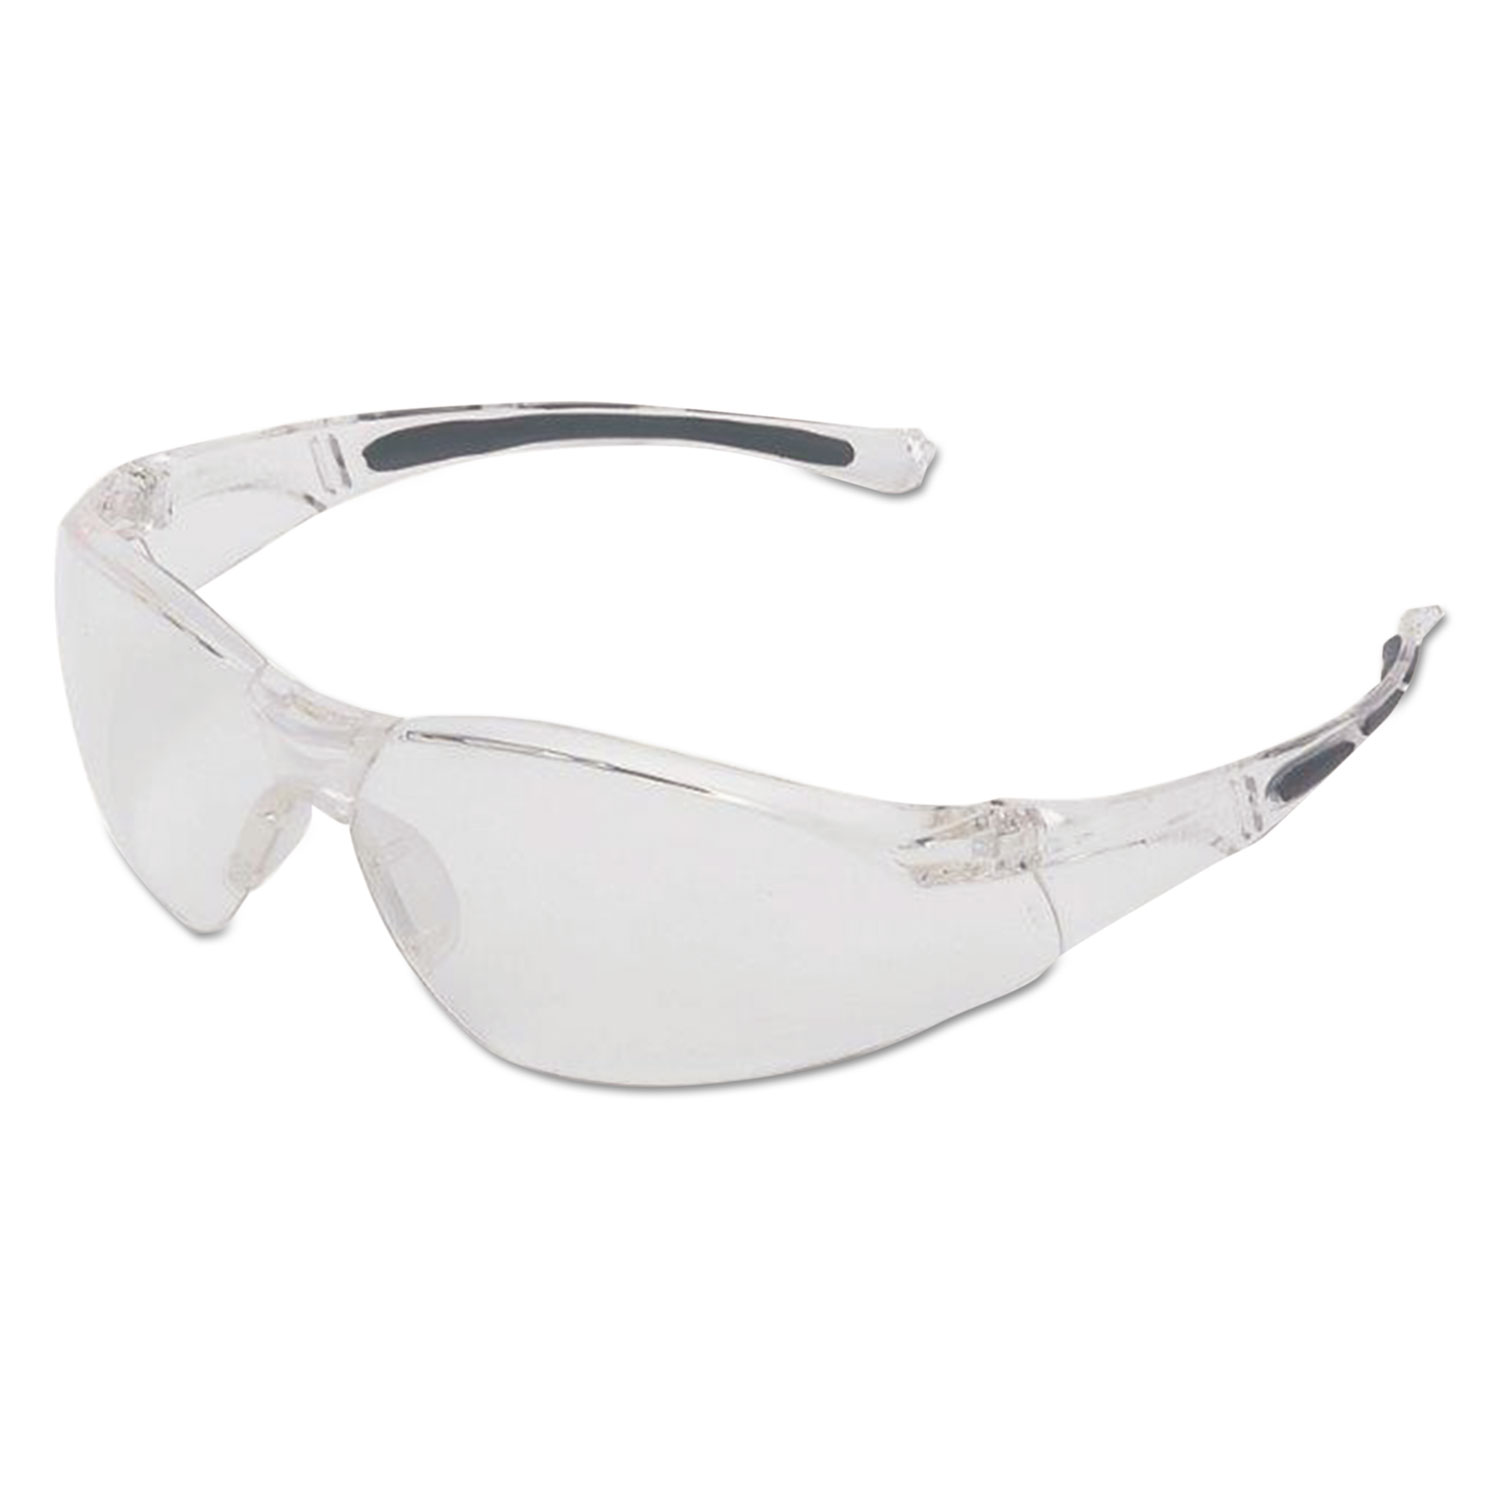  Honeywell A800 A800 Series Safety Eyewear, Clear Frame, Clear Lens (UVXA800) 